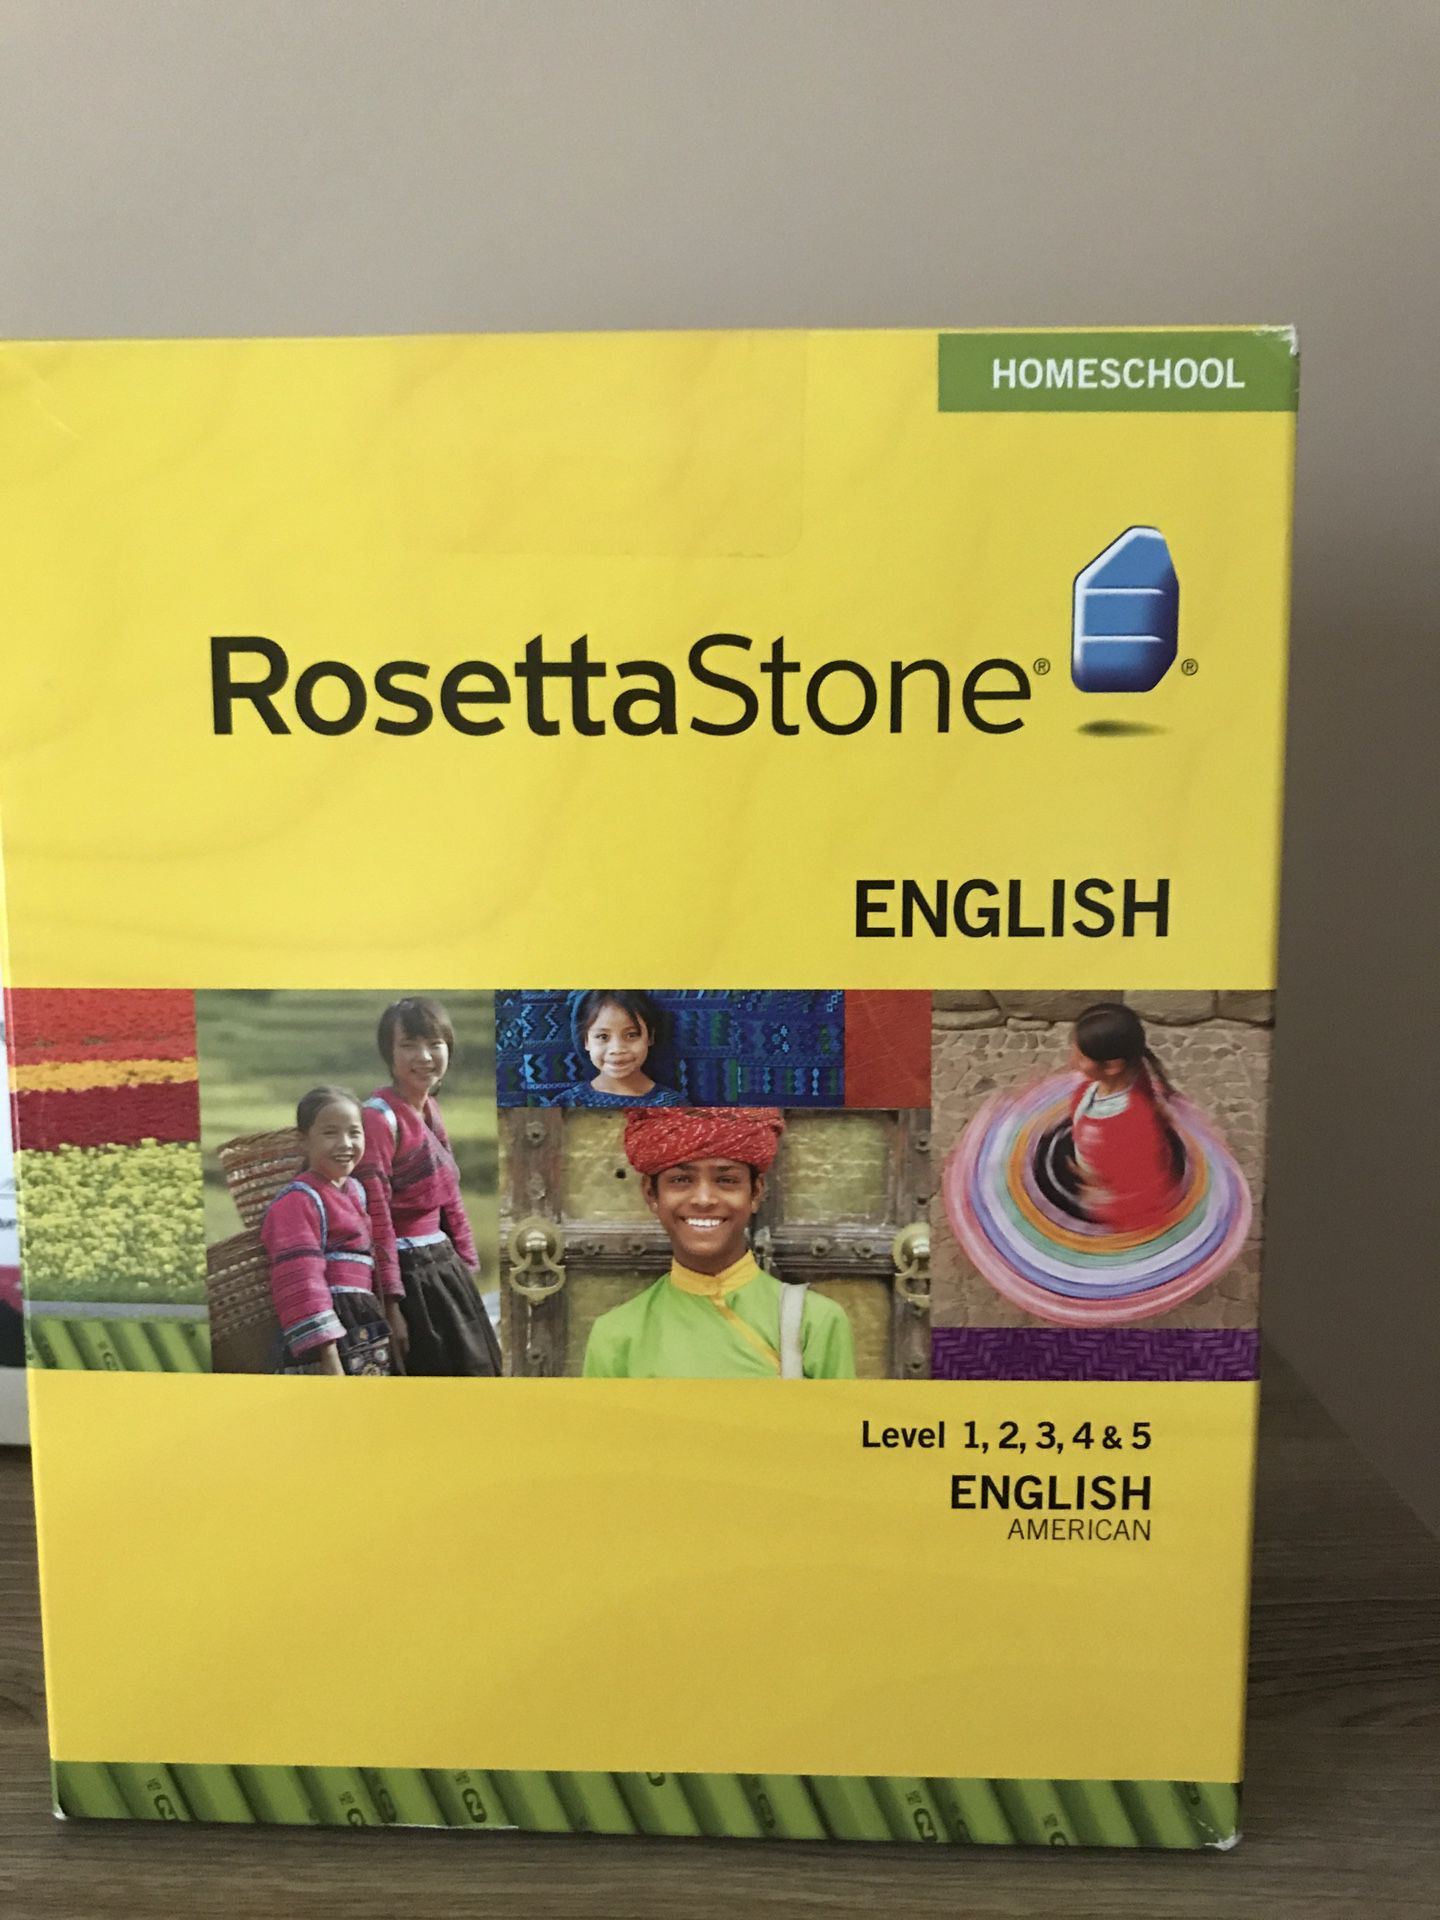 Rosetta Stone Homeschool English